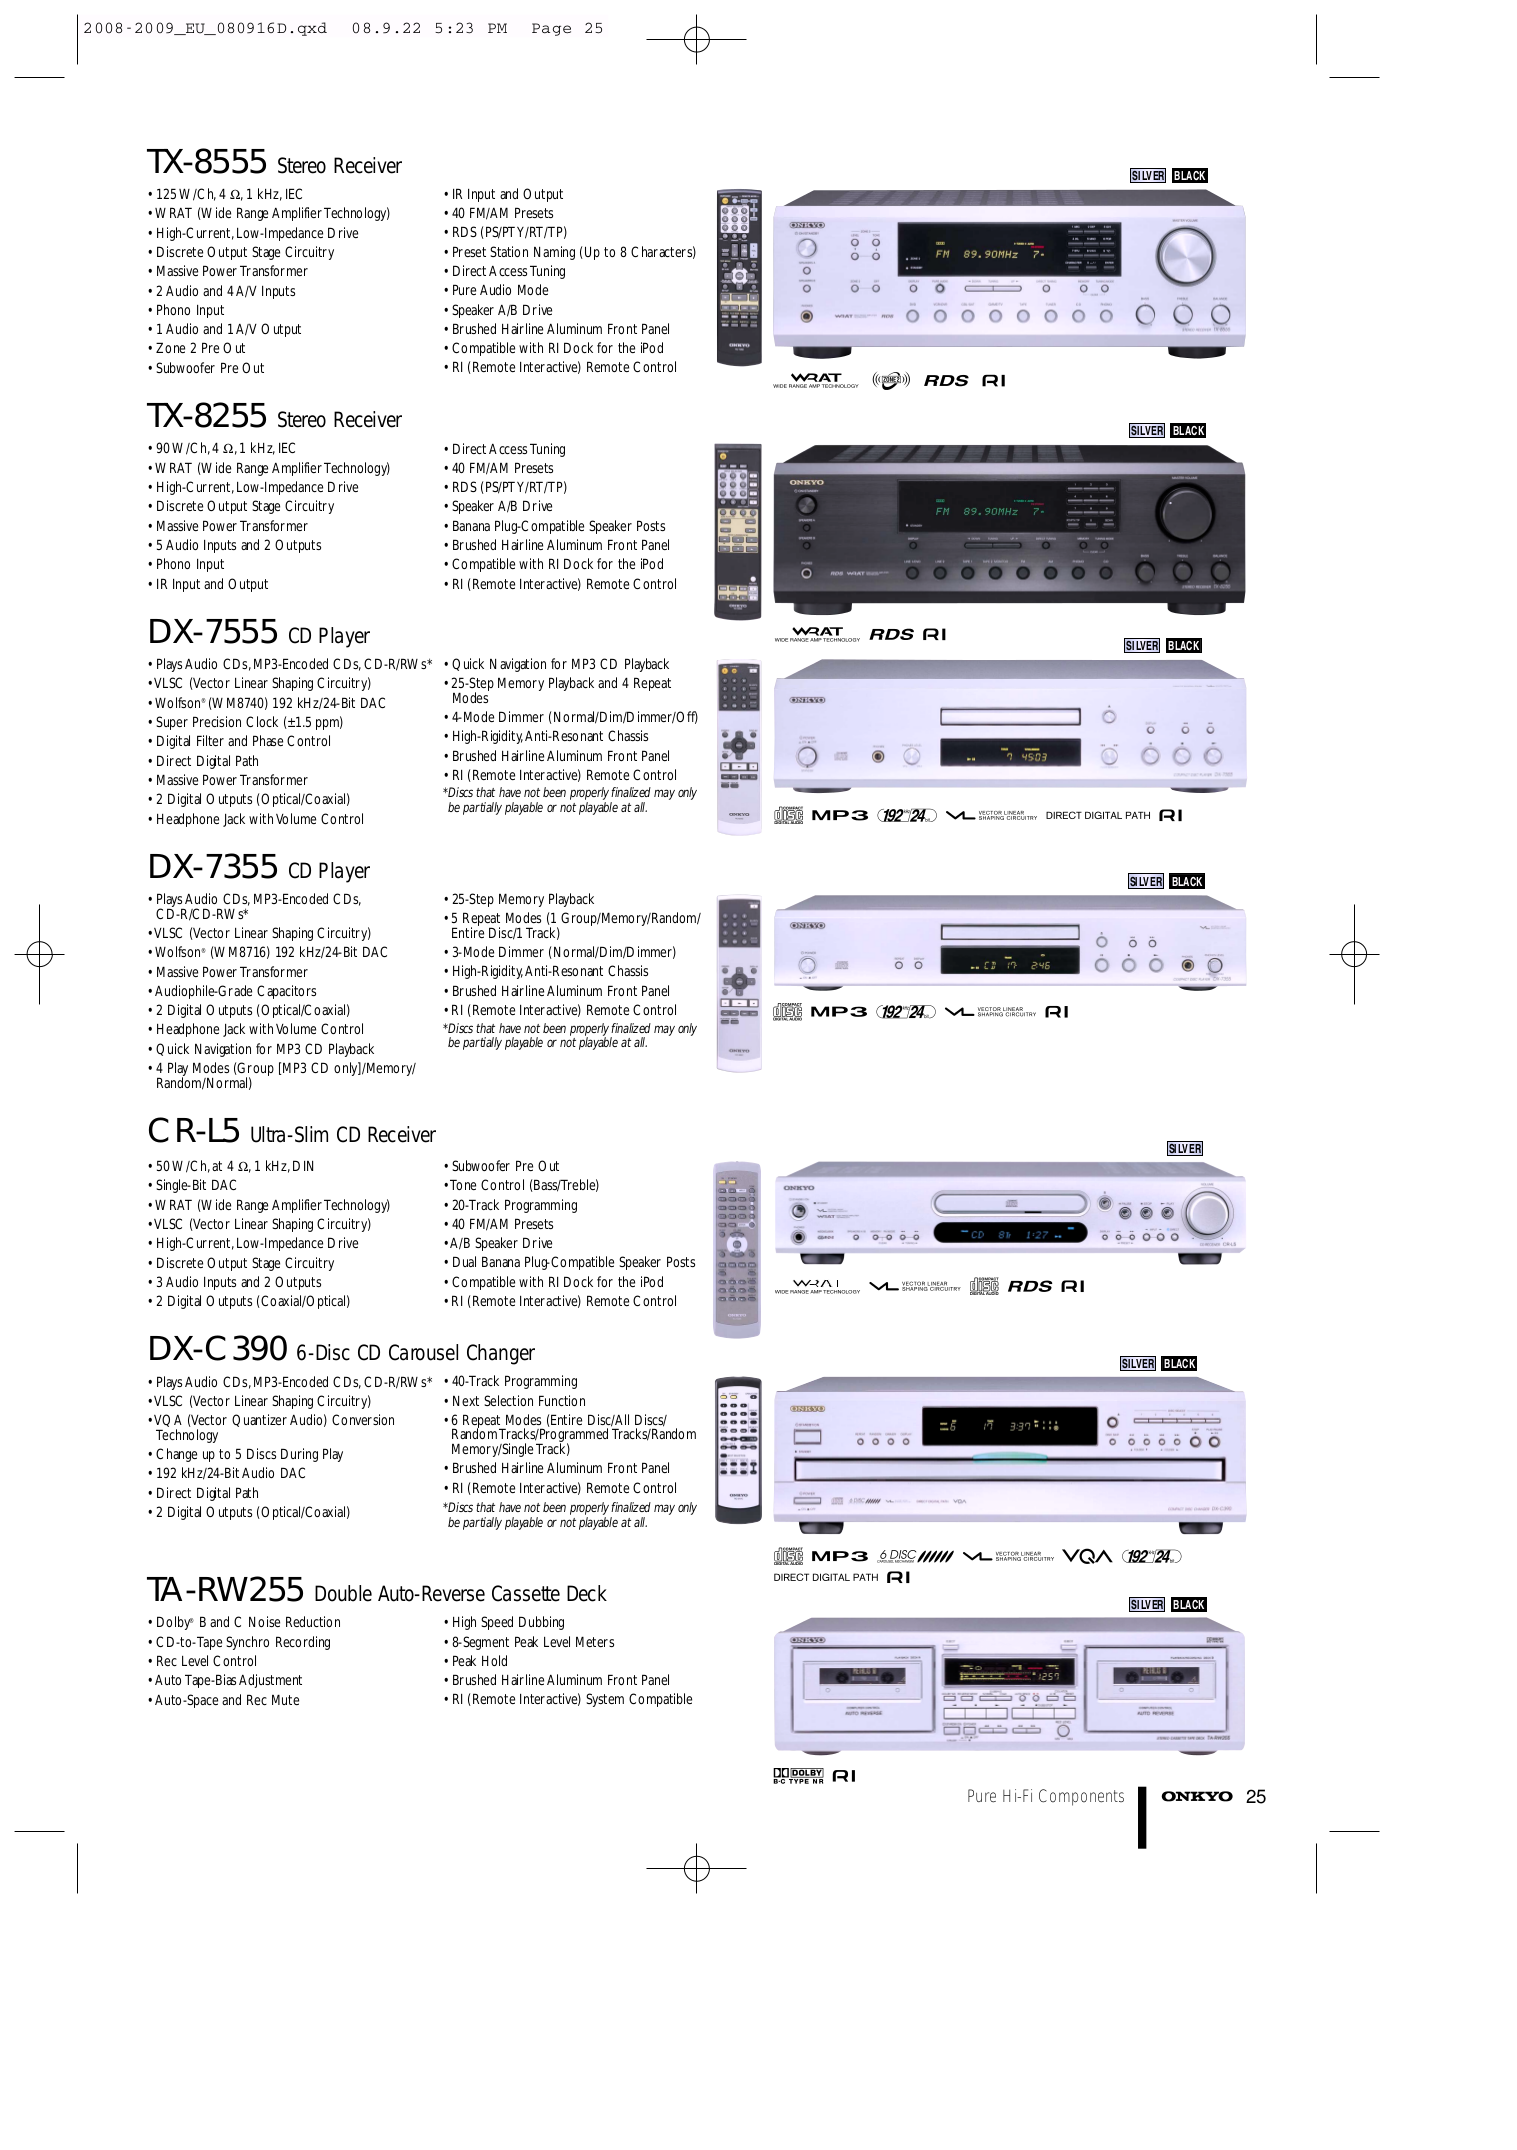 Download free pdf for Onkyo TX-SR606 Receiver manual